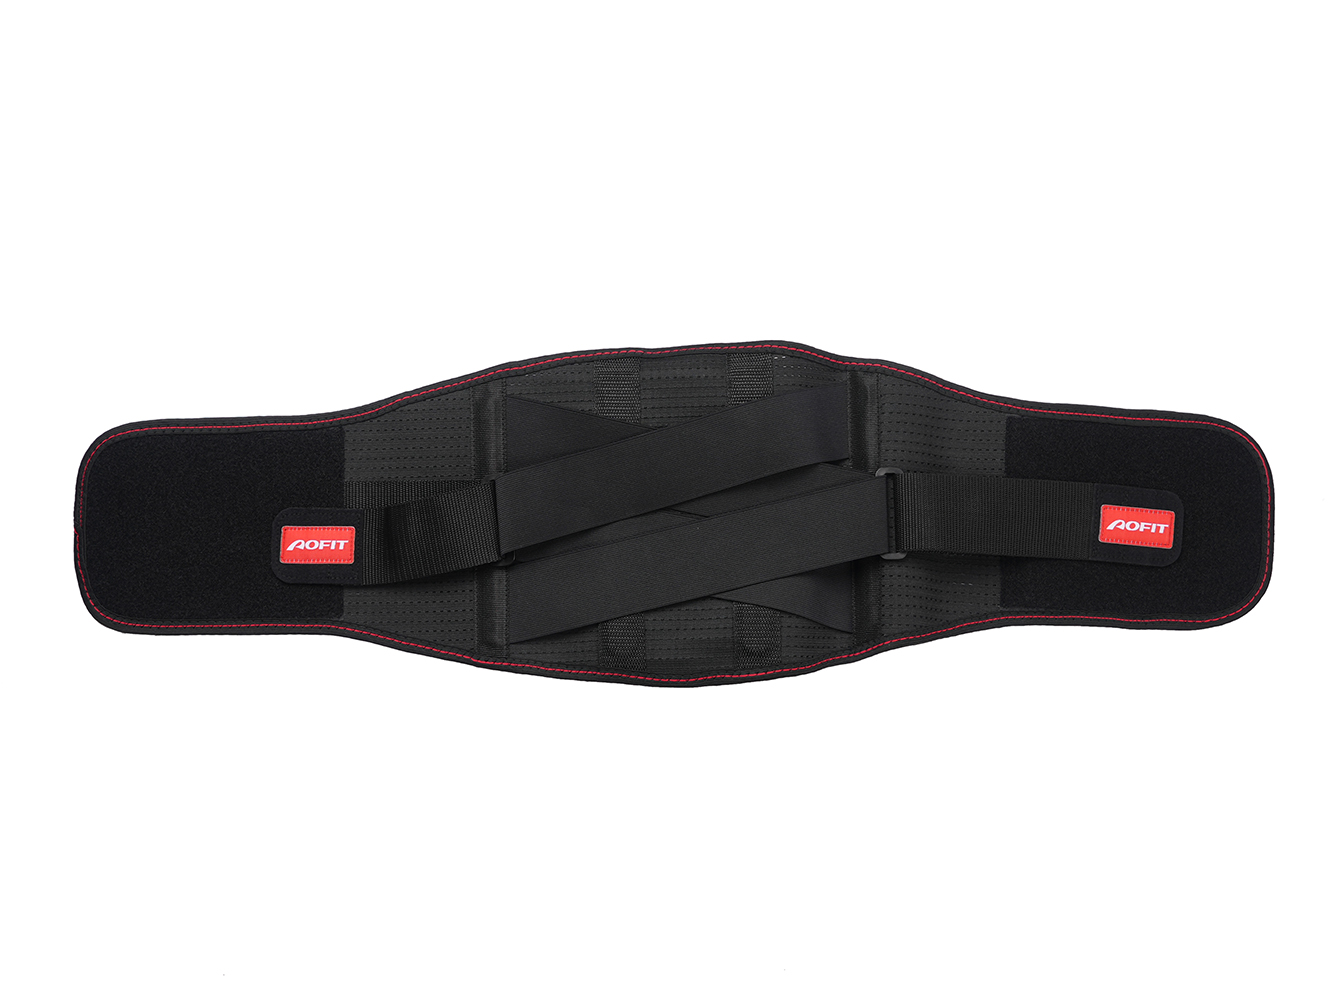 Waist Support Brace,New Adjustable Lumbar Back Support Sport Exercise Waist Slimming Belt